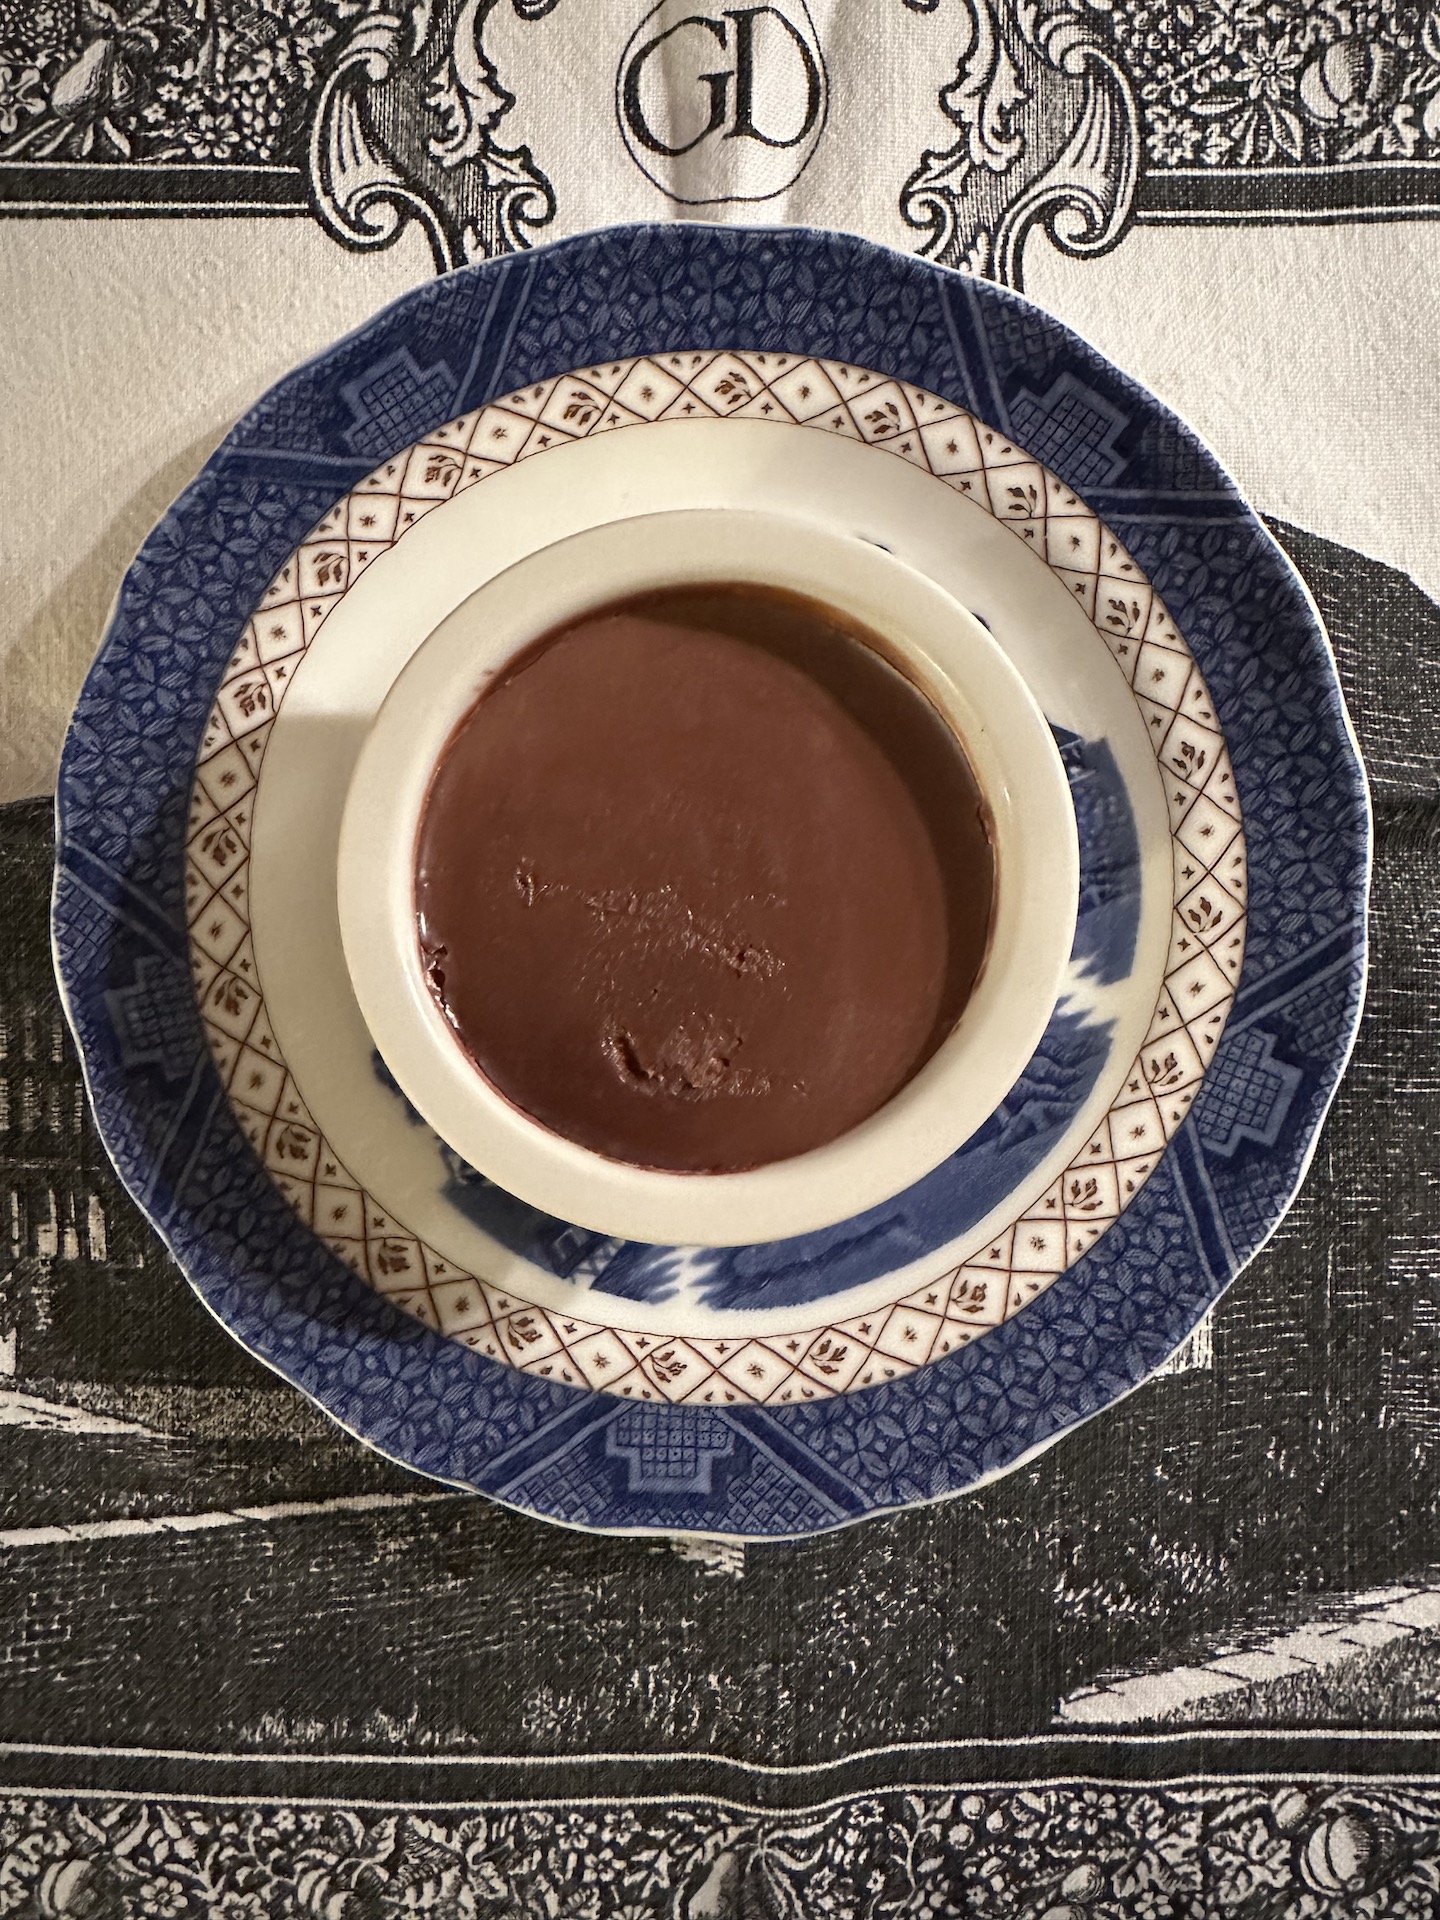 Vegan Mocha Chocolate Mousse in ramekin